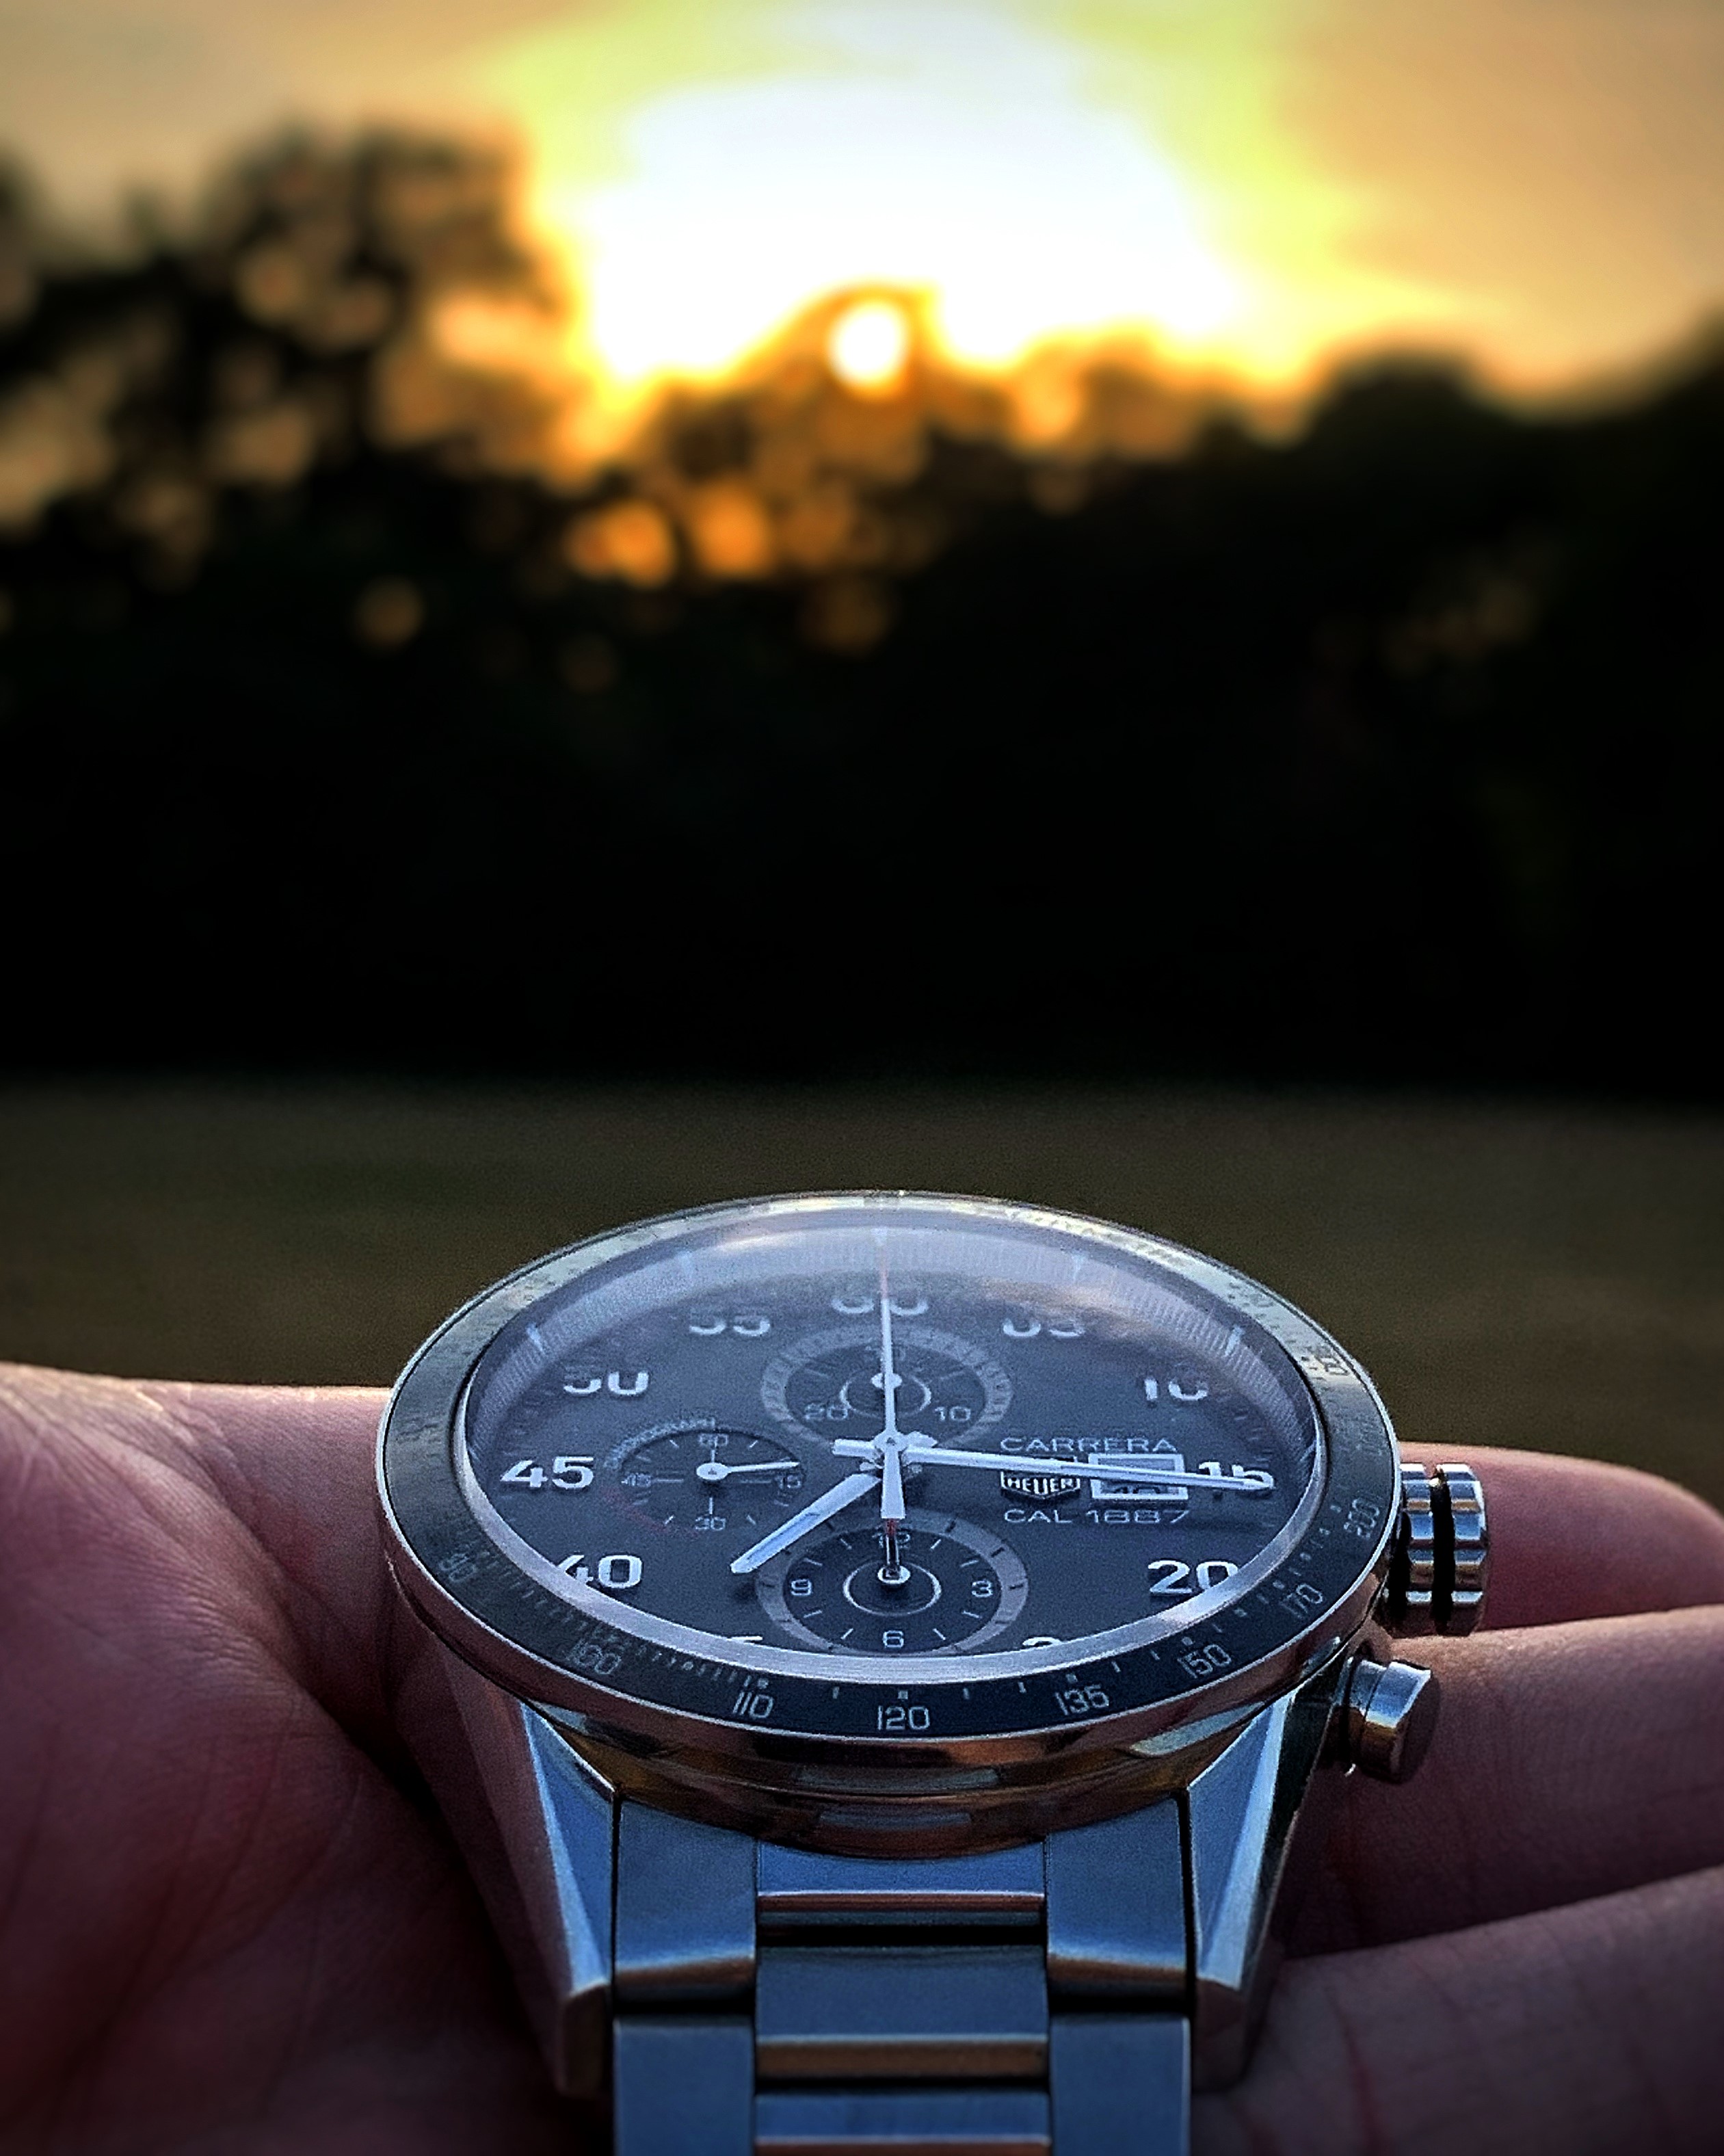 southern hemisphere watch compass